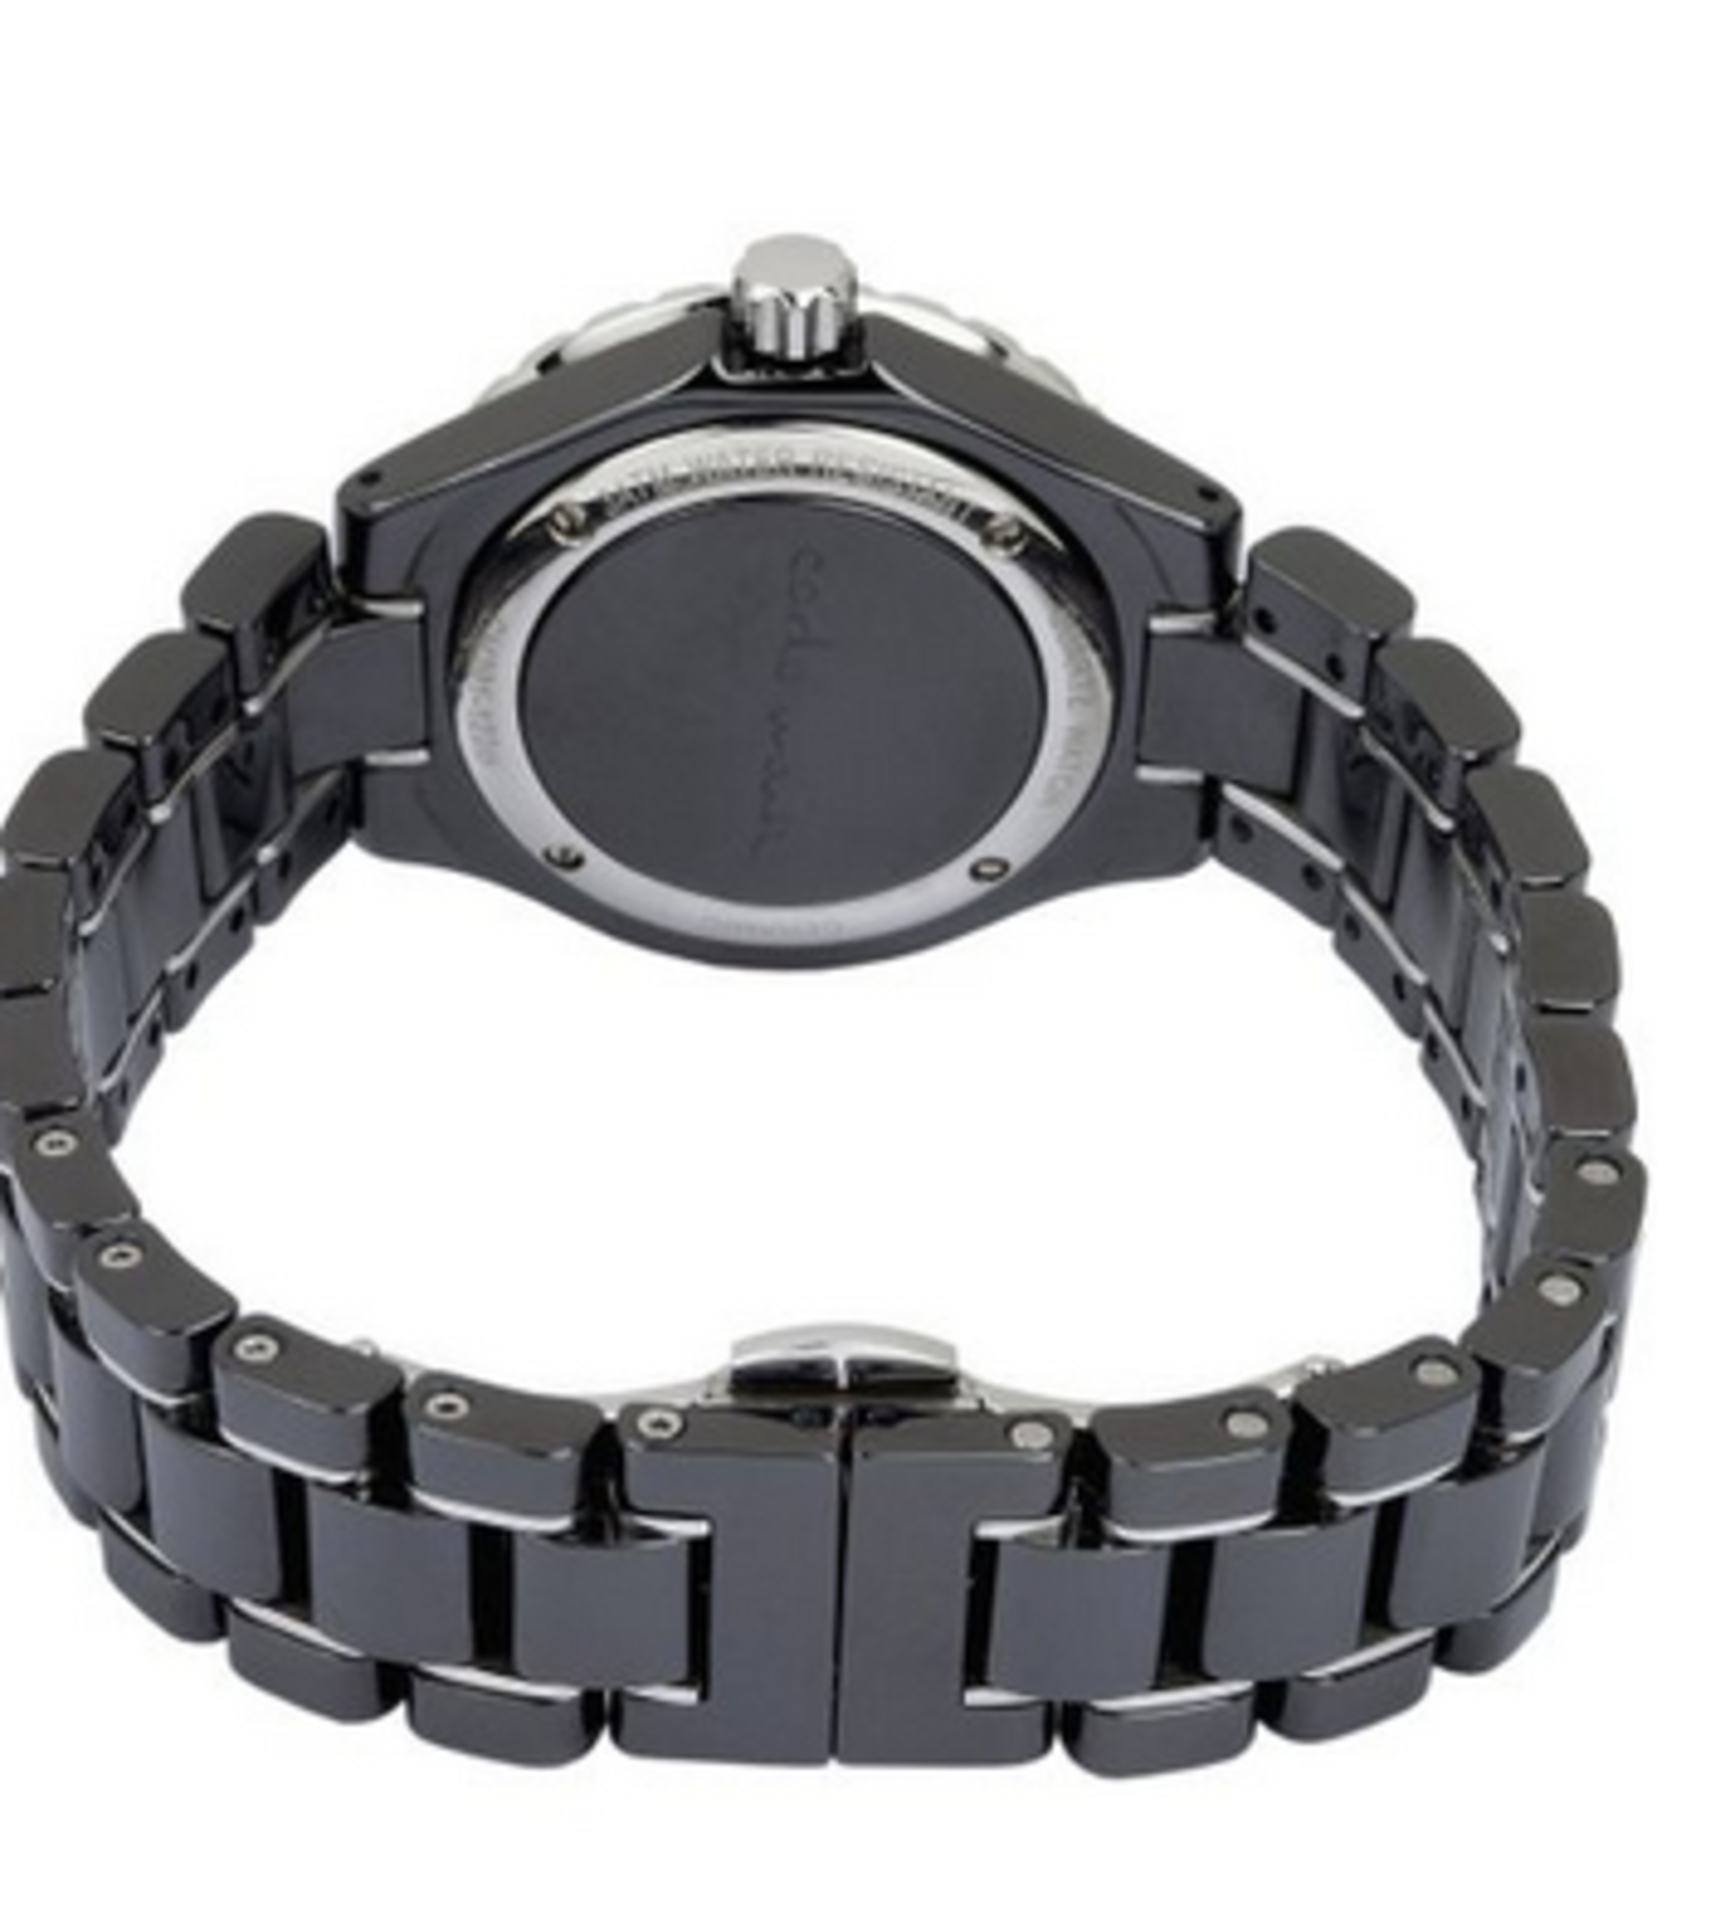 Carlo Monti Ladies Watch, Mother Of Pearl Dial, Black Ceramic Bracelet RRP £280 - Image 3 of 3